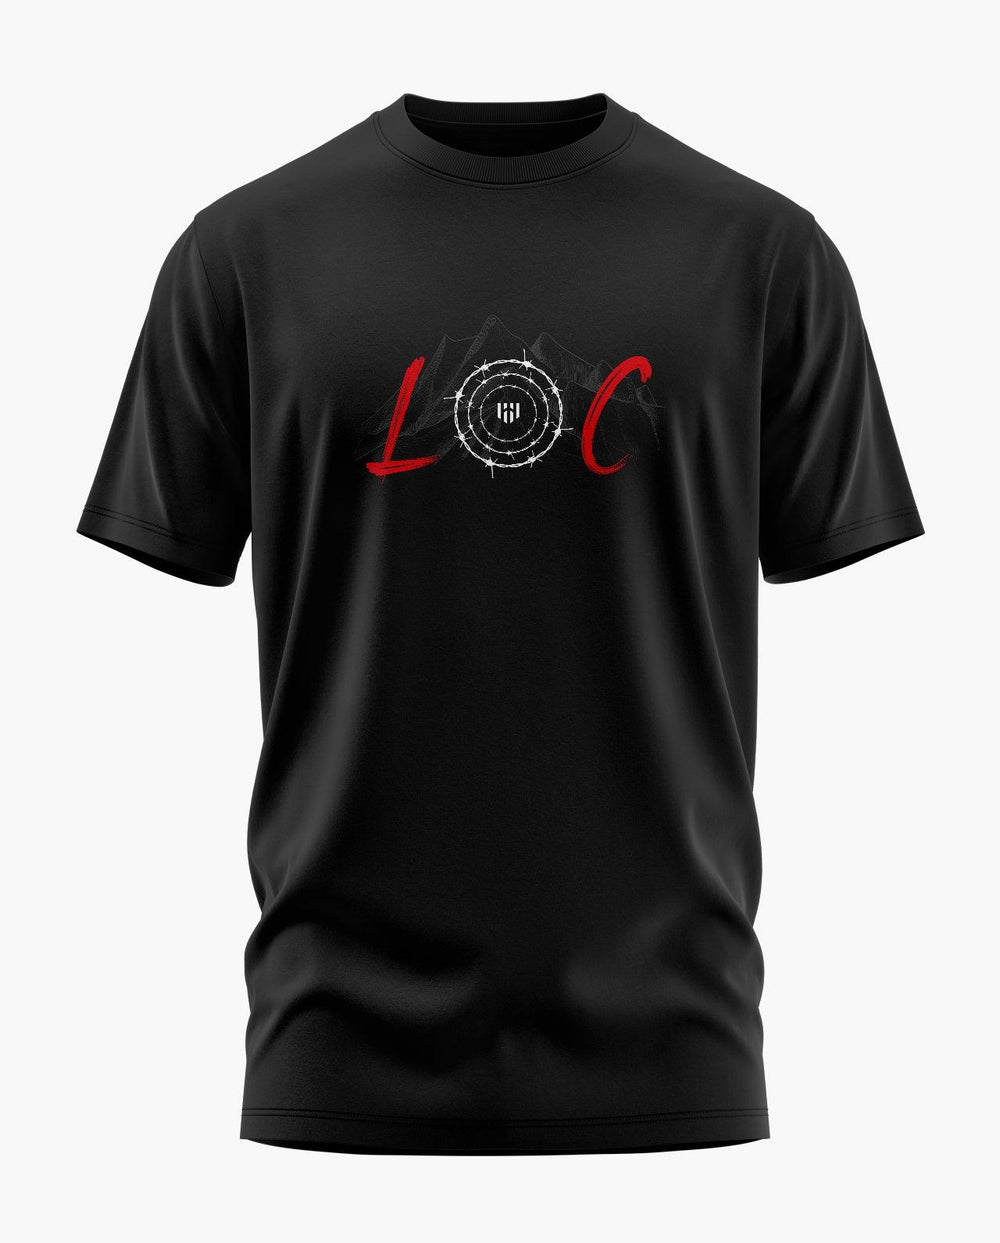 LOC T-Shirt - Aero Armour